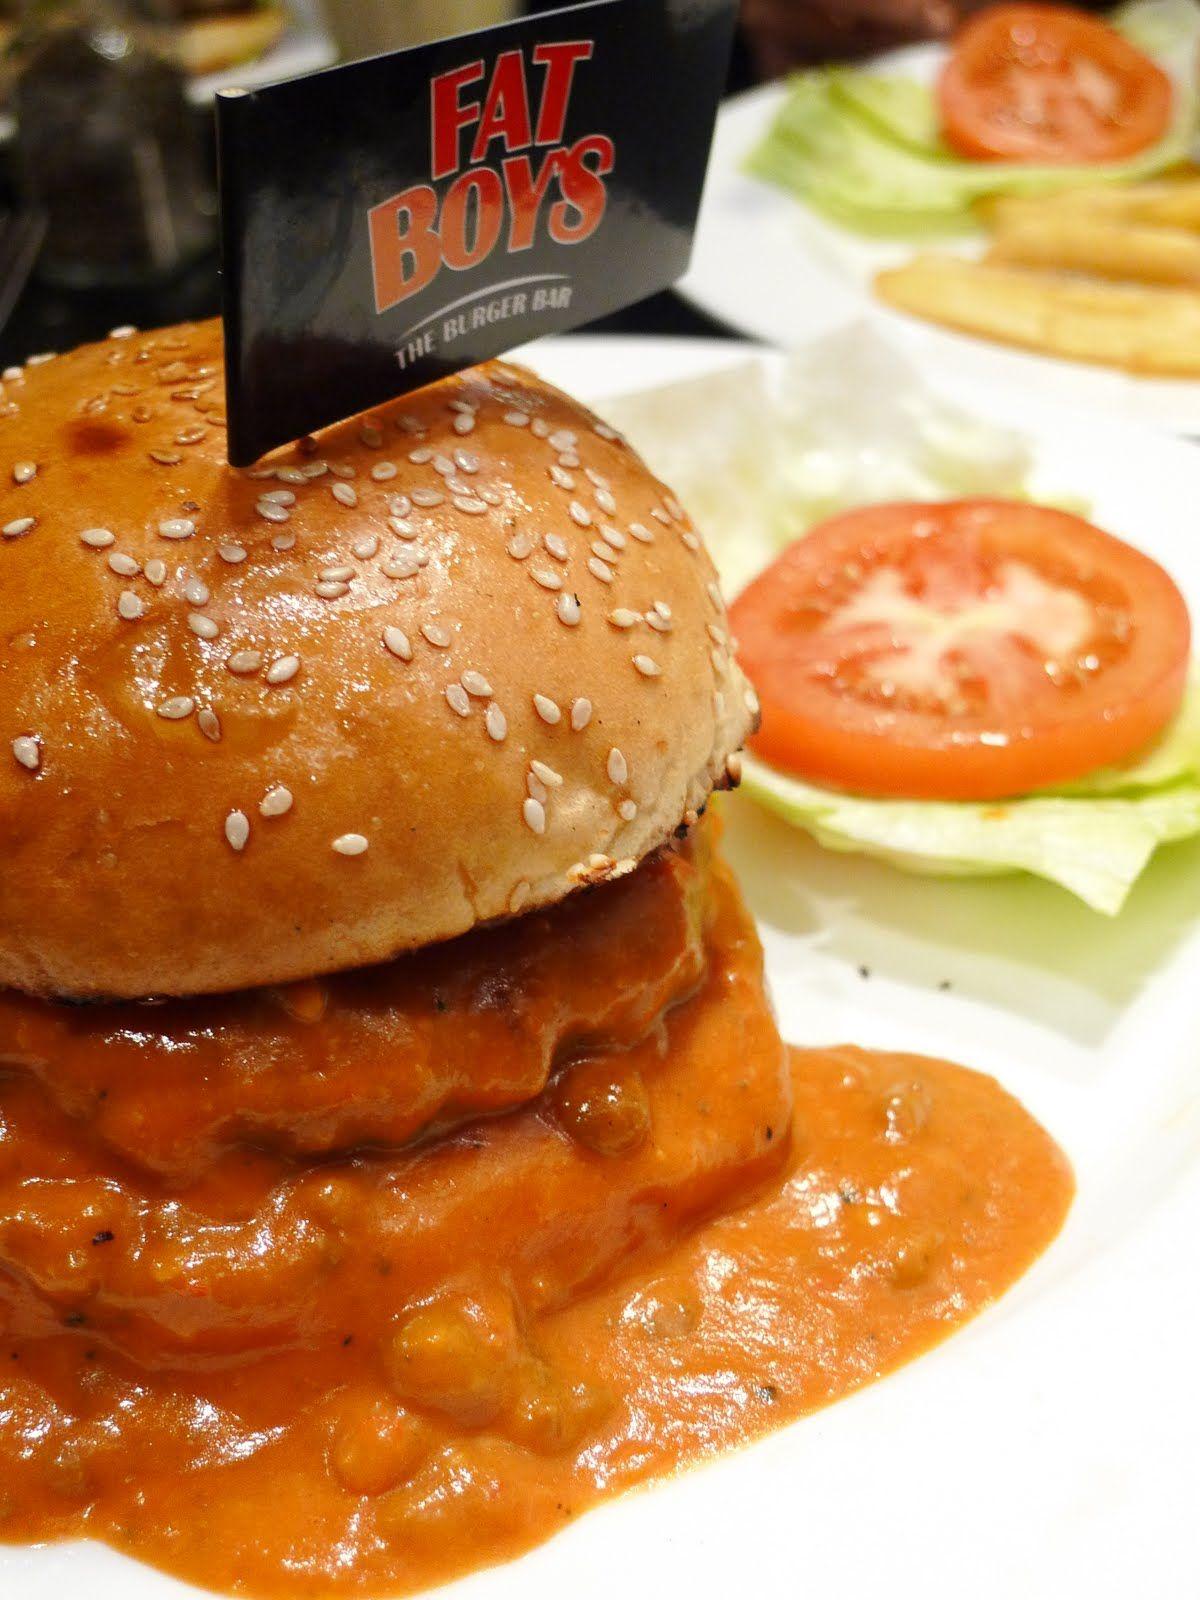 Fat Boys Burgers Logo - The Hungry Cow: Fat Boys Burgers